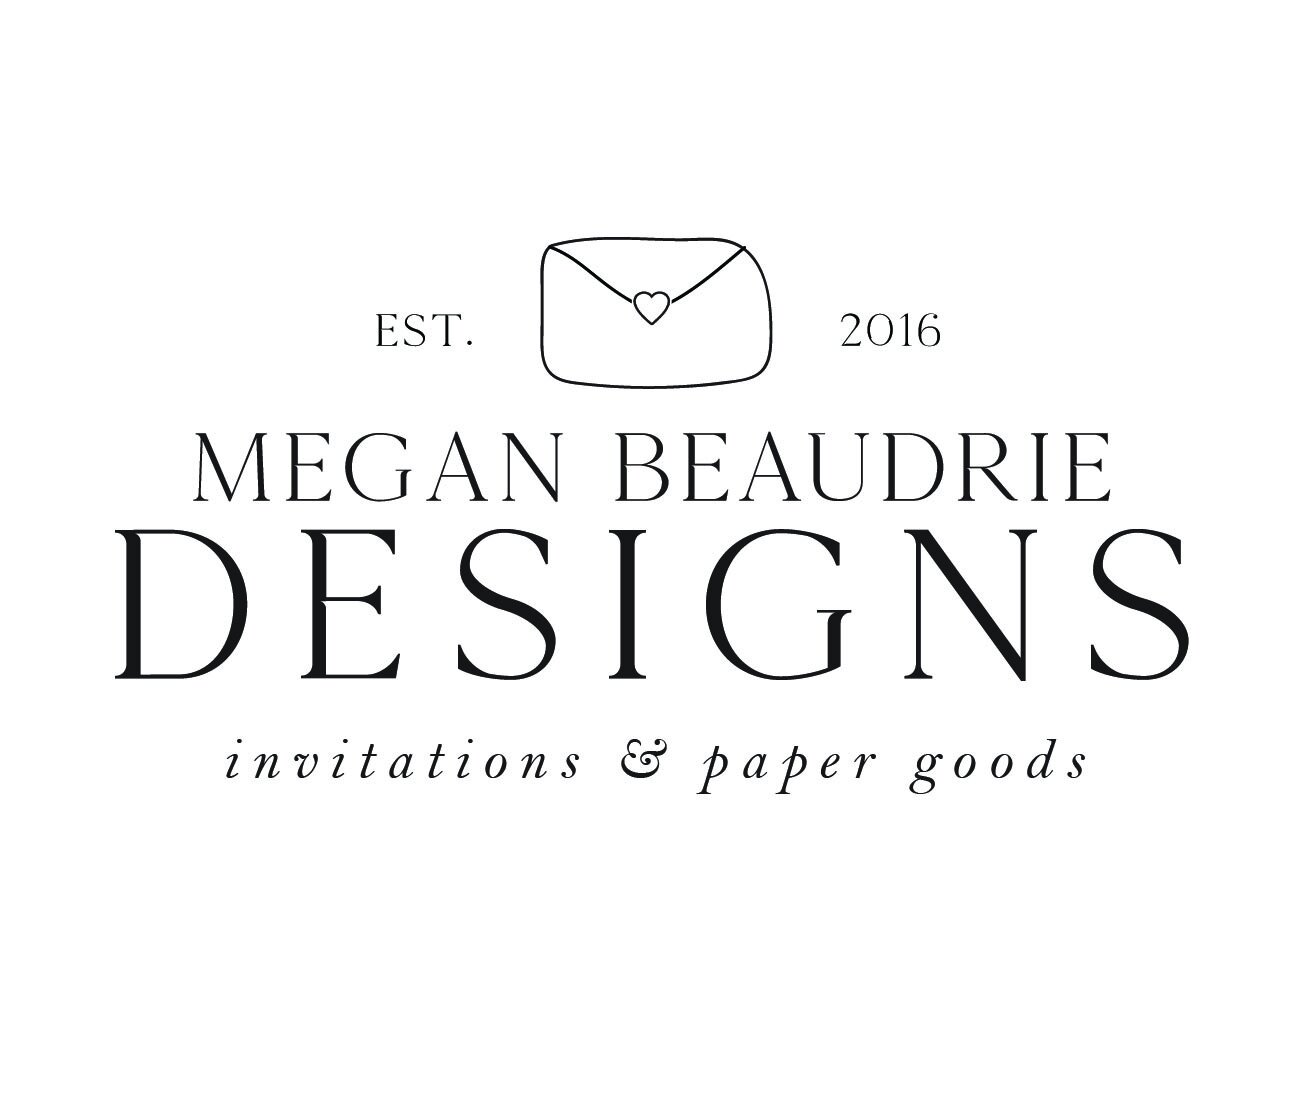 Megan Beaudrie Designs